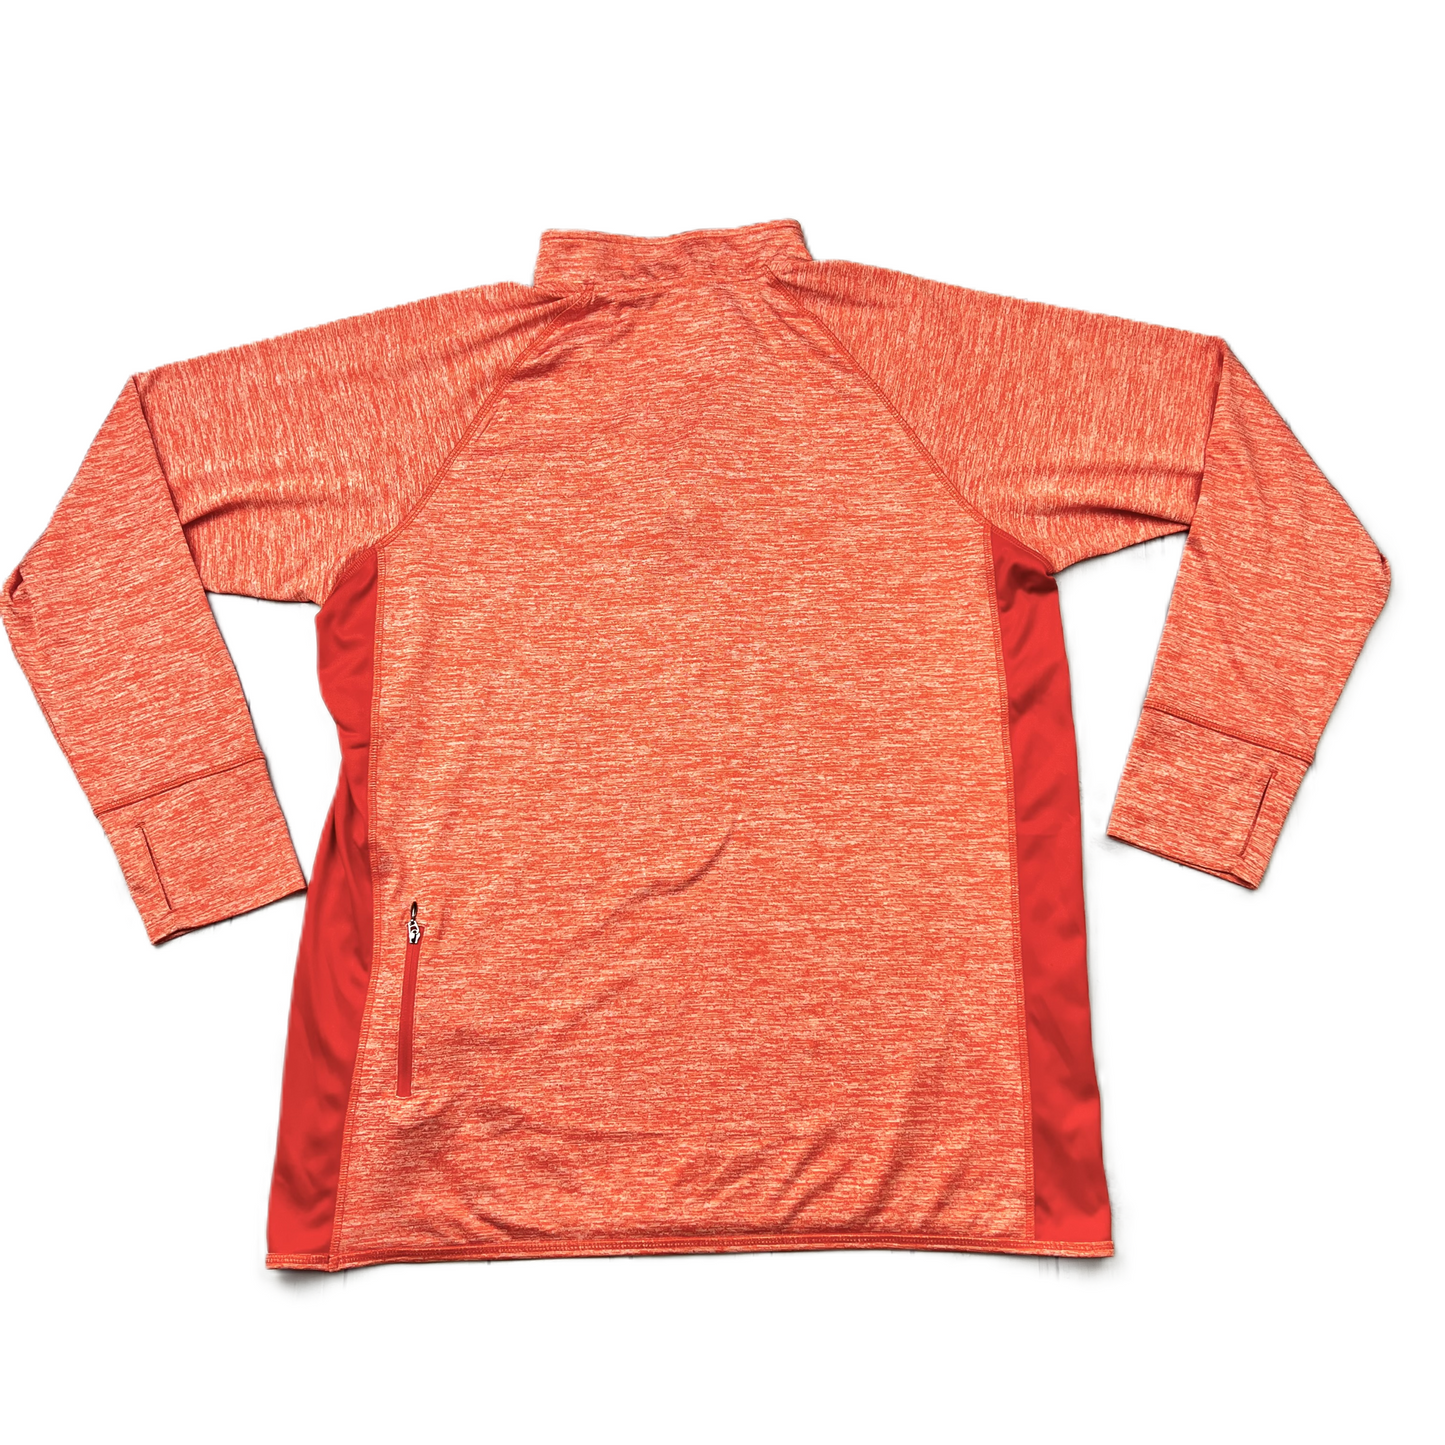 Orange Athletic Jacket By Baw, Size: L